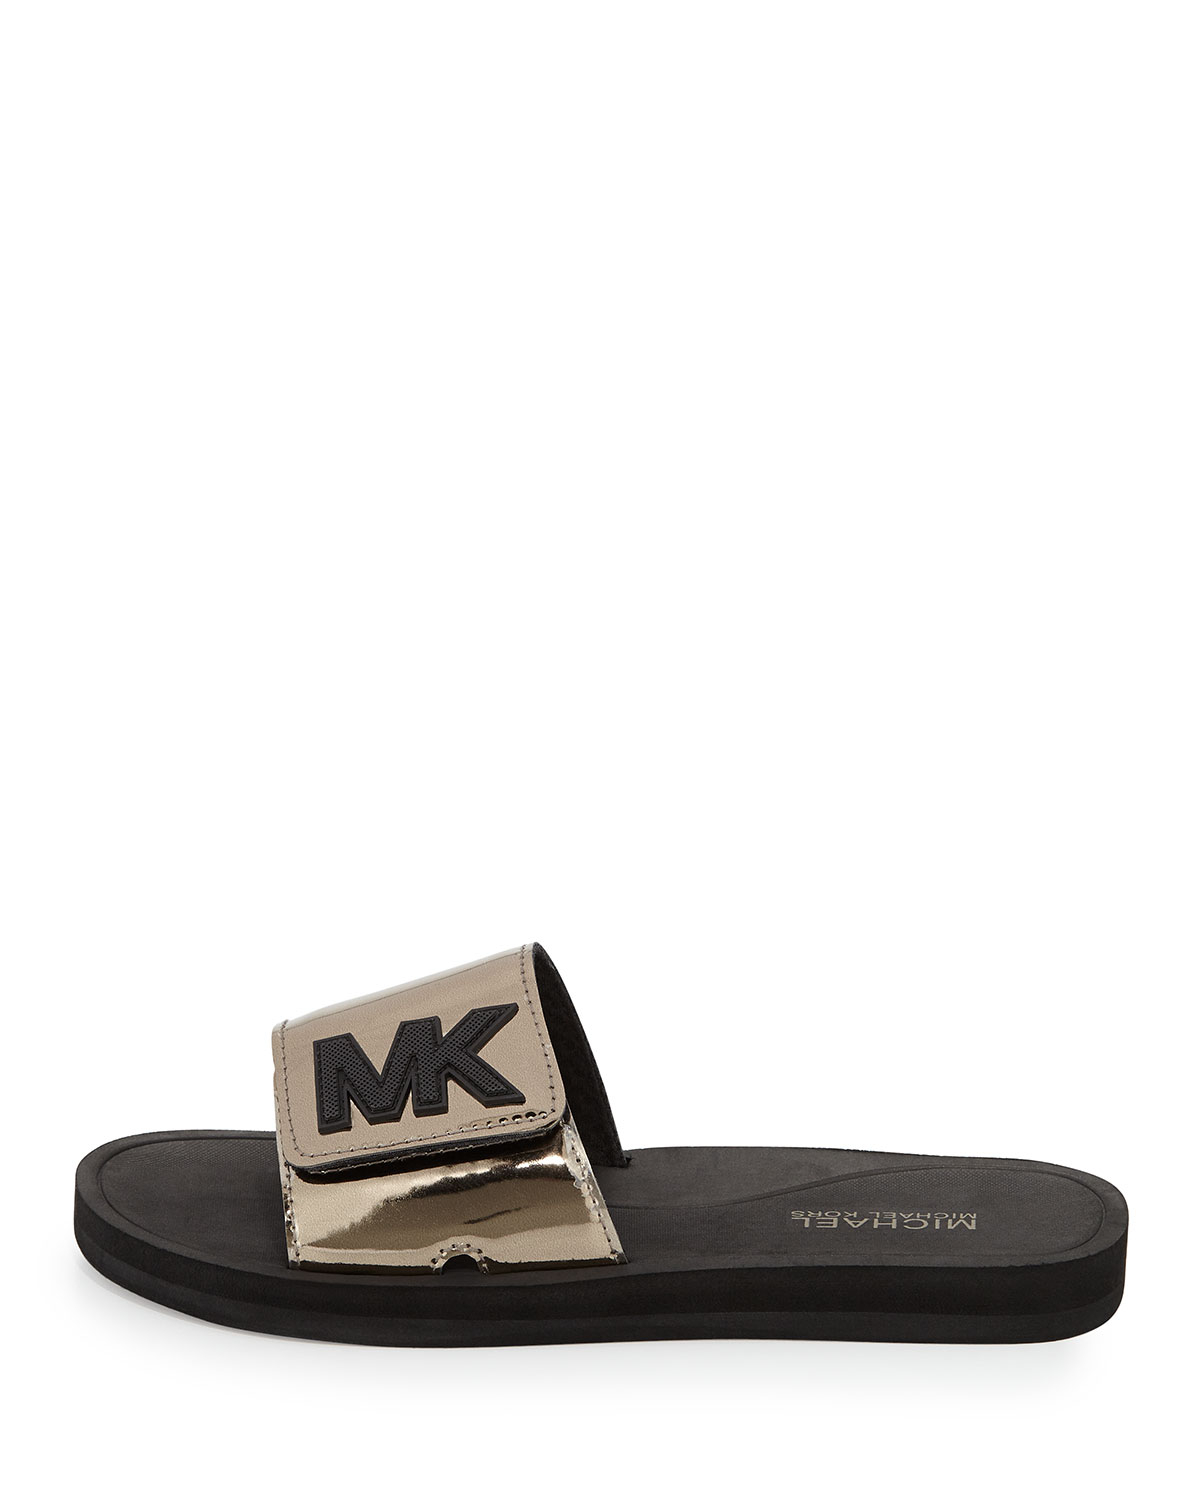 MK sandals sale